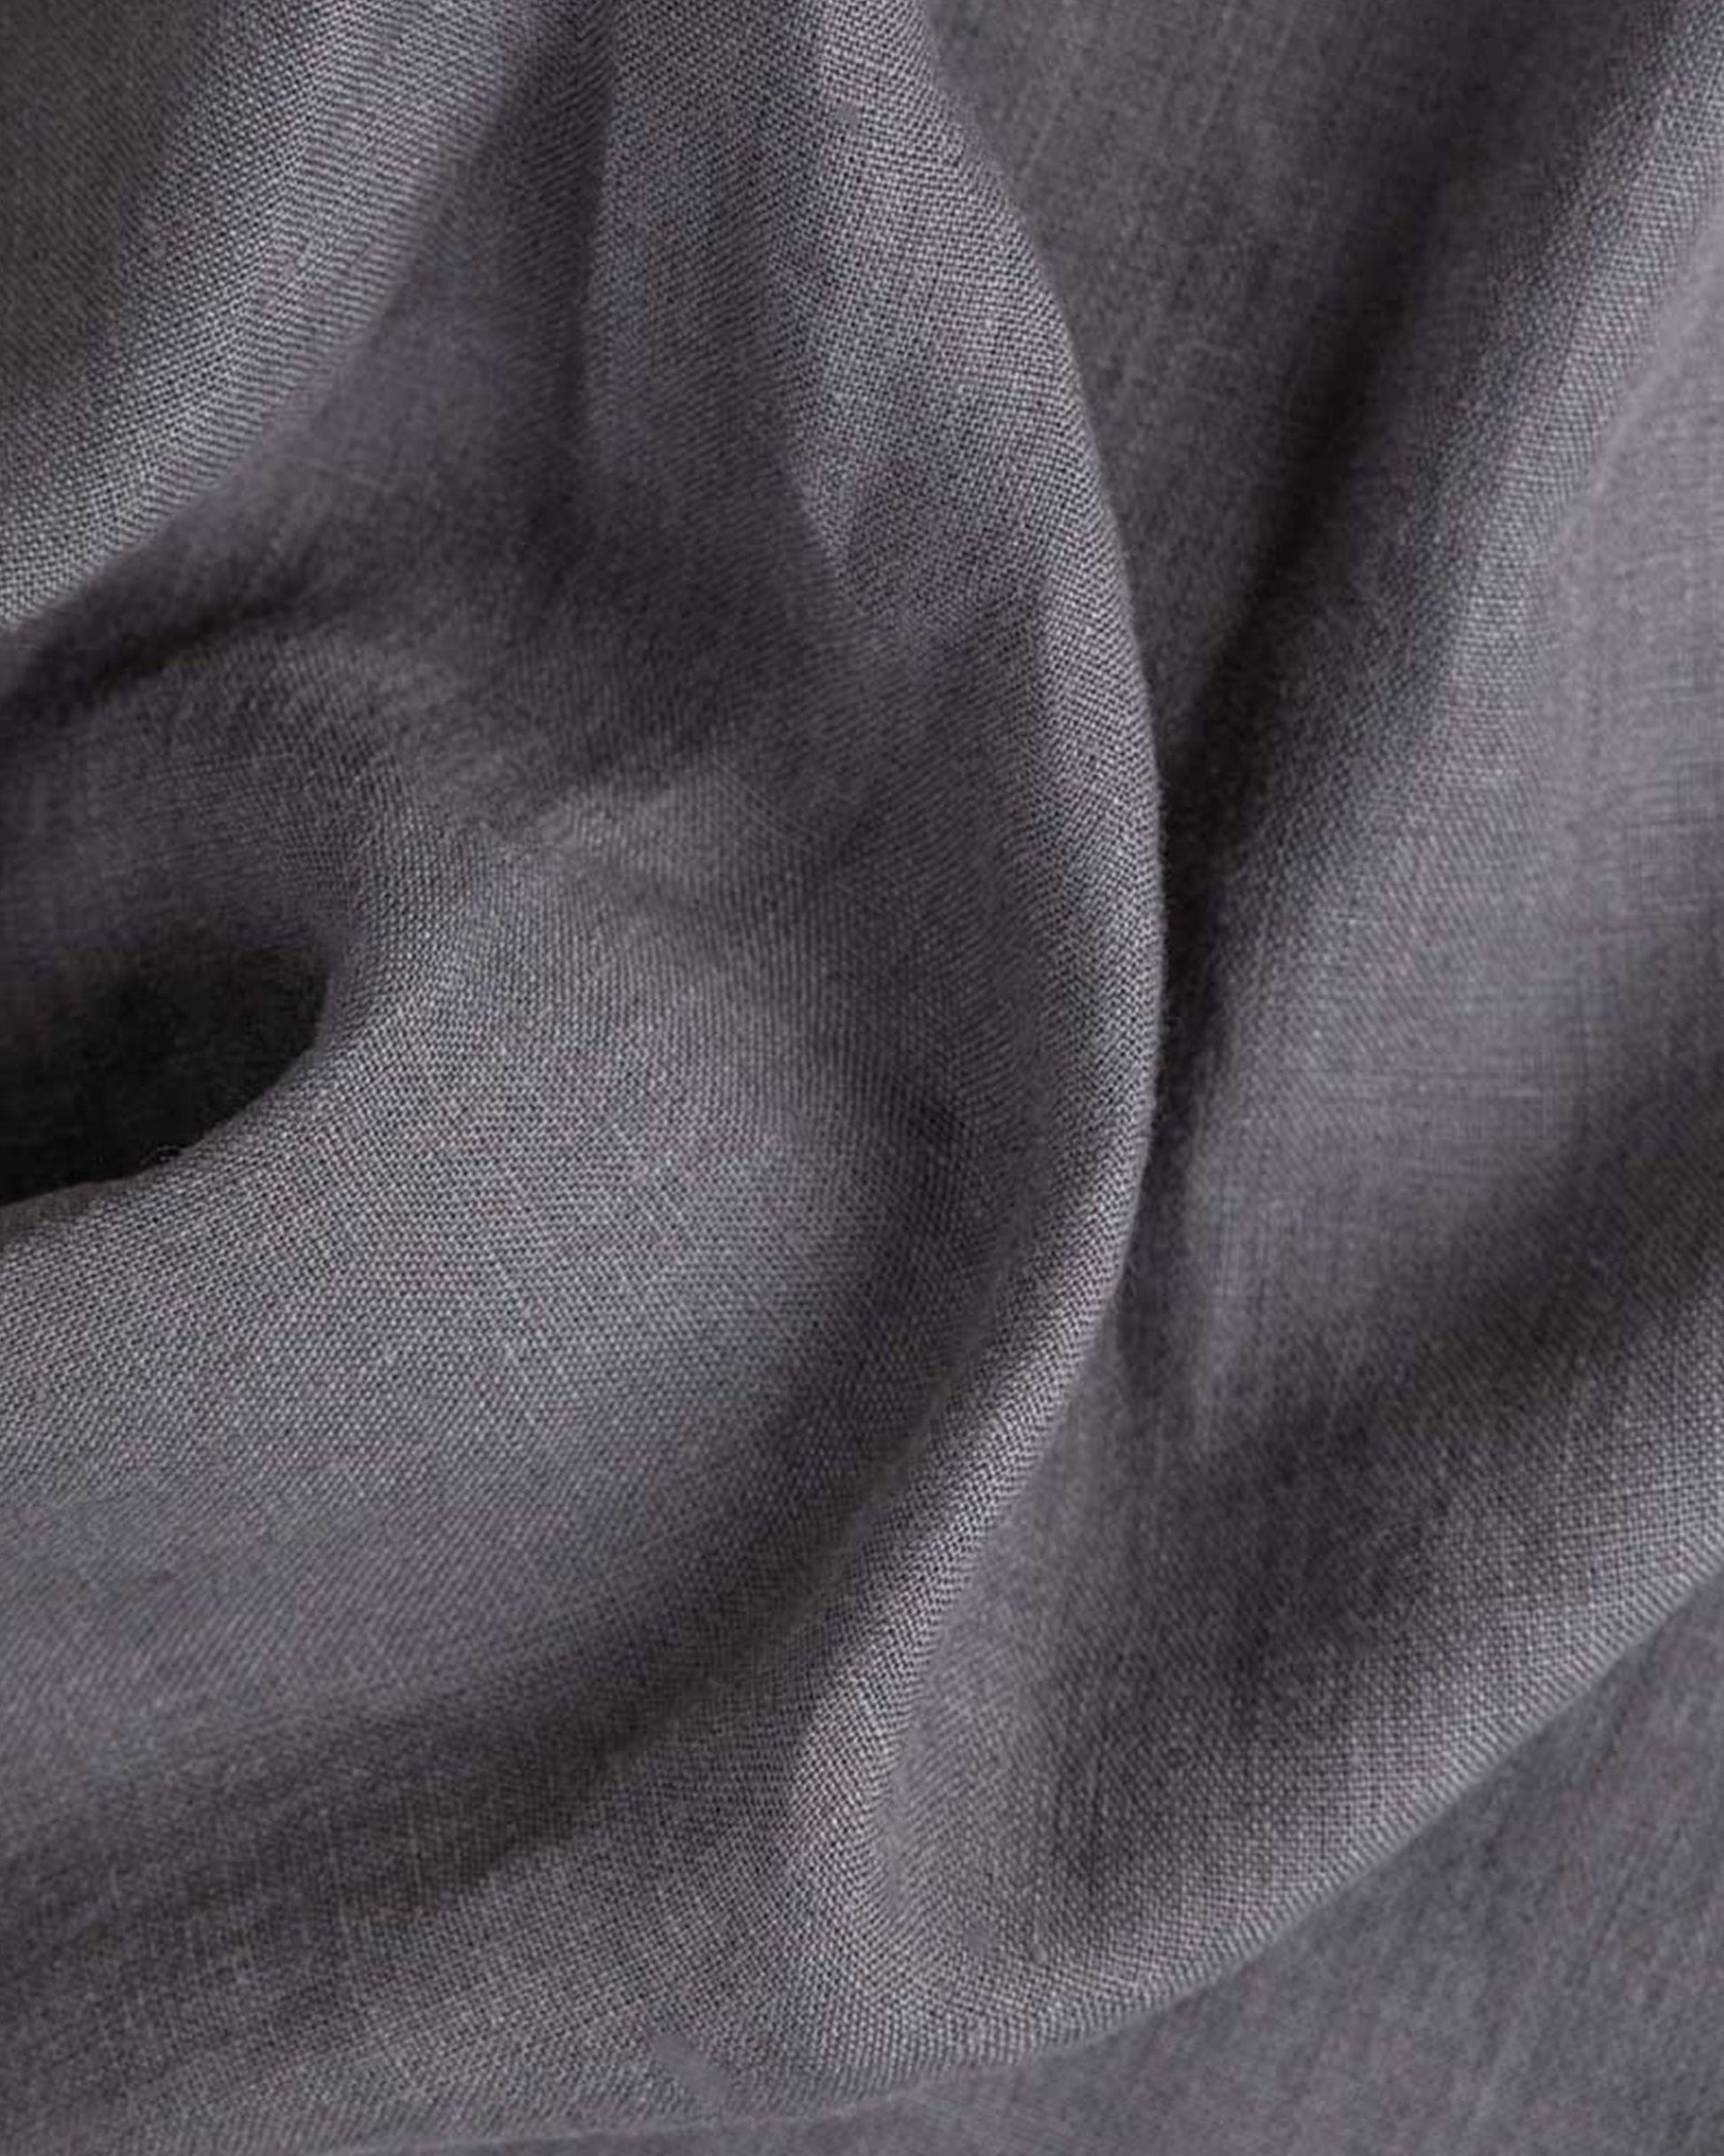 Charcoal gray linen sheet set (4 pcs) - MagicLinen